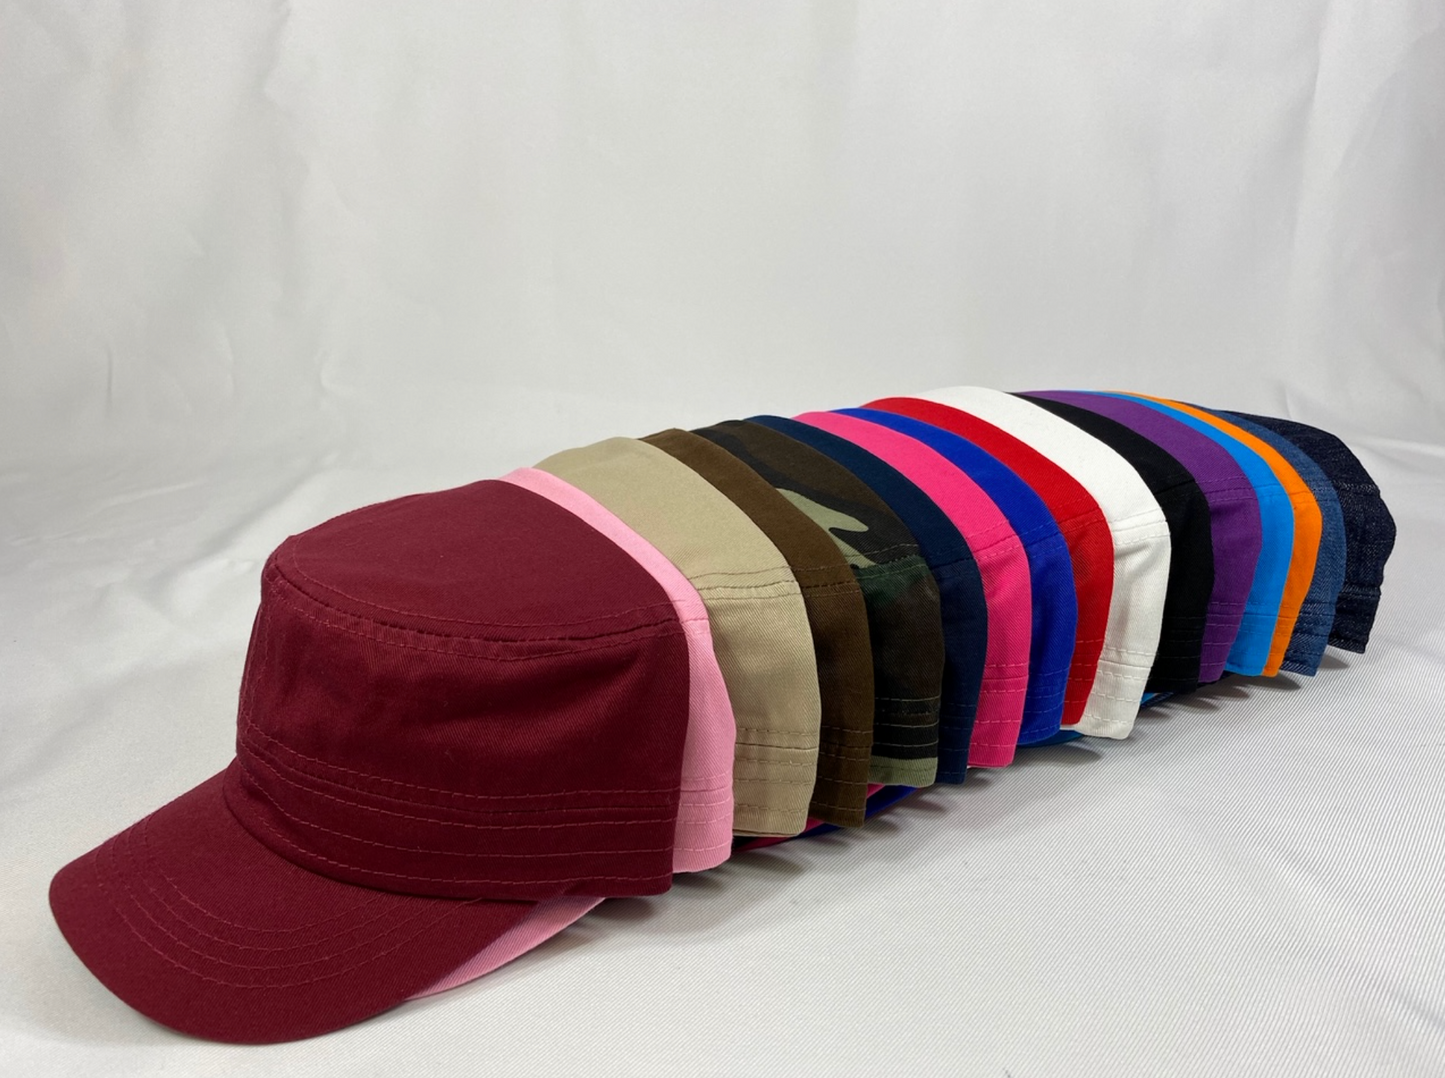 Basketball Hand Patch Rhinestone Hat, Basketball Hat, Rhinestone Hat, Embroidered Hats, Rhinestone Cap, Hats, Caps